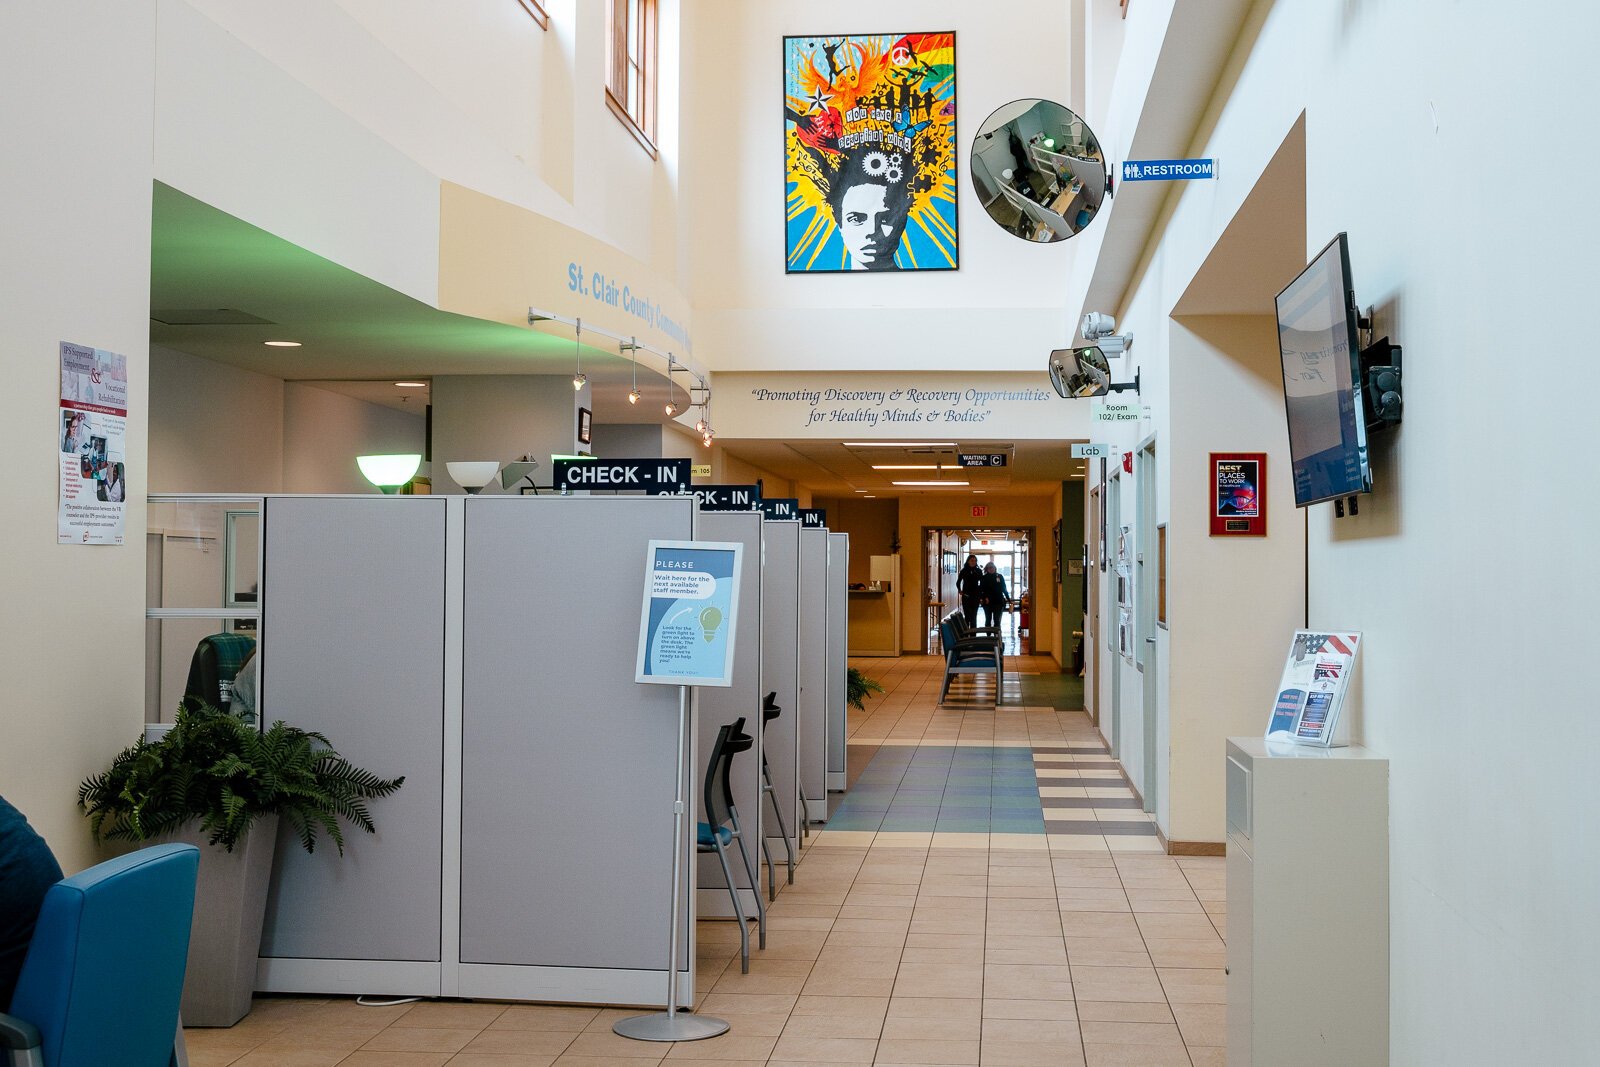 St. Clair Community Mental Health reception area